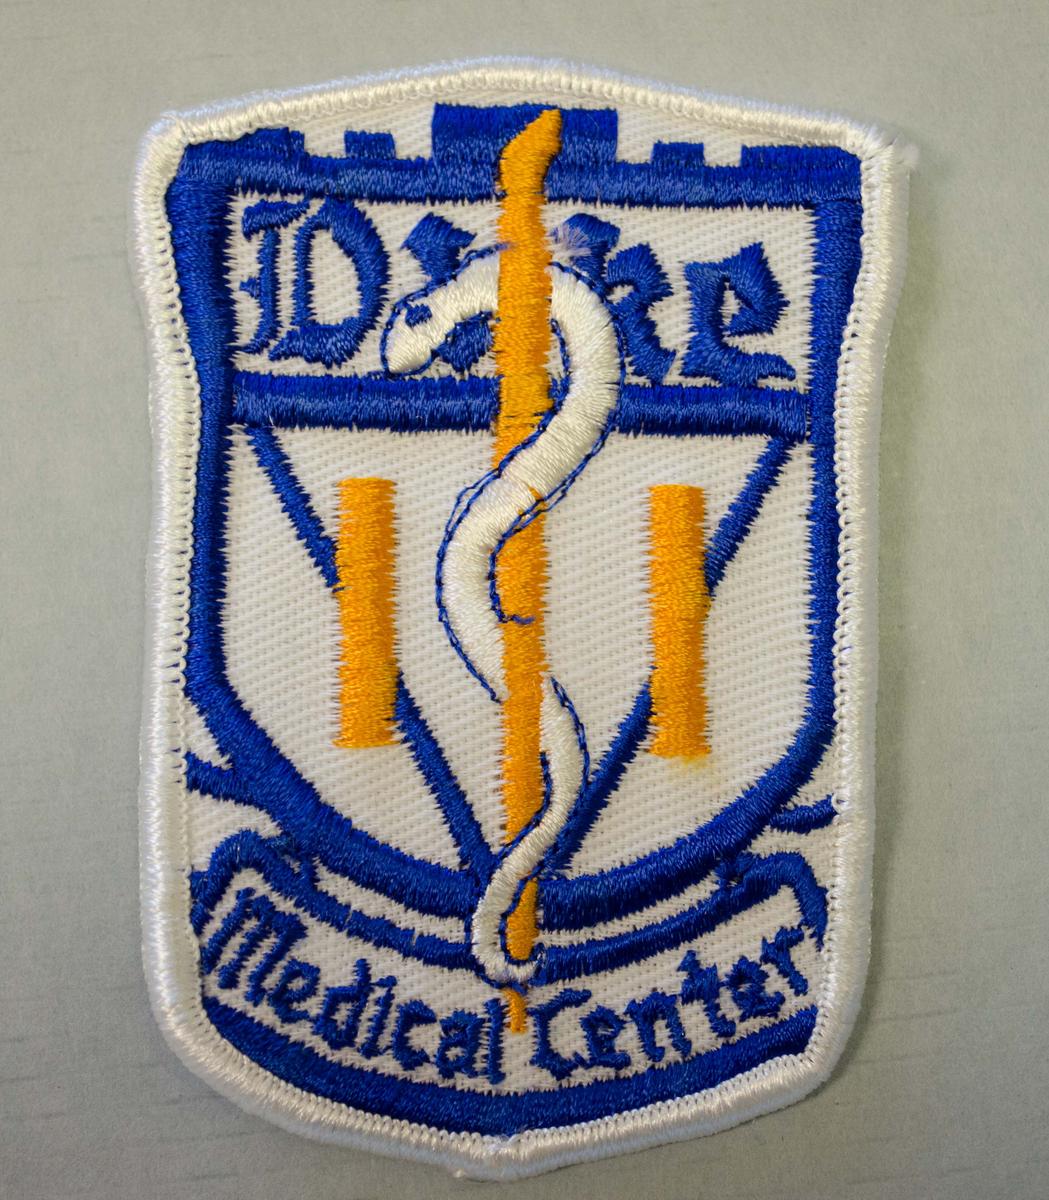 Medical Center patch